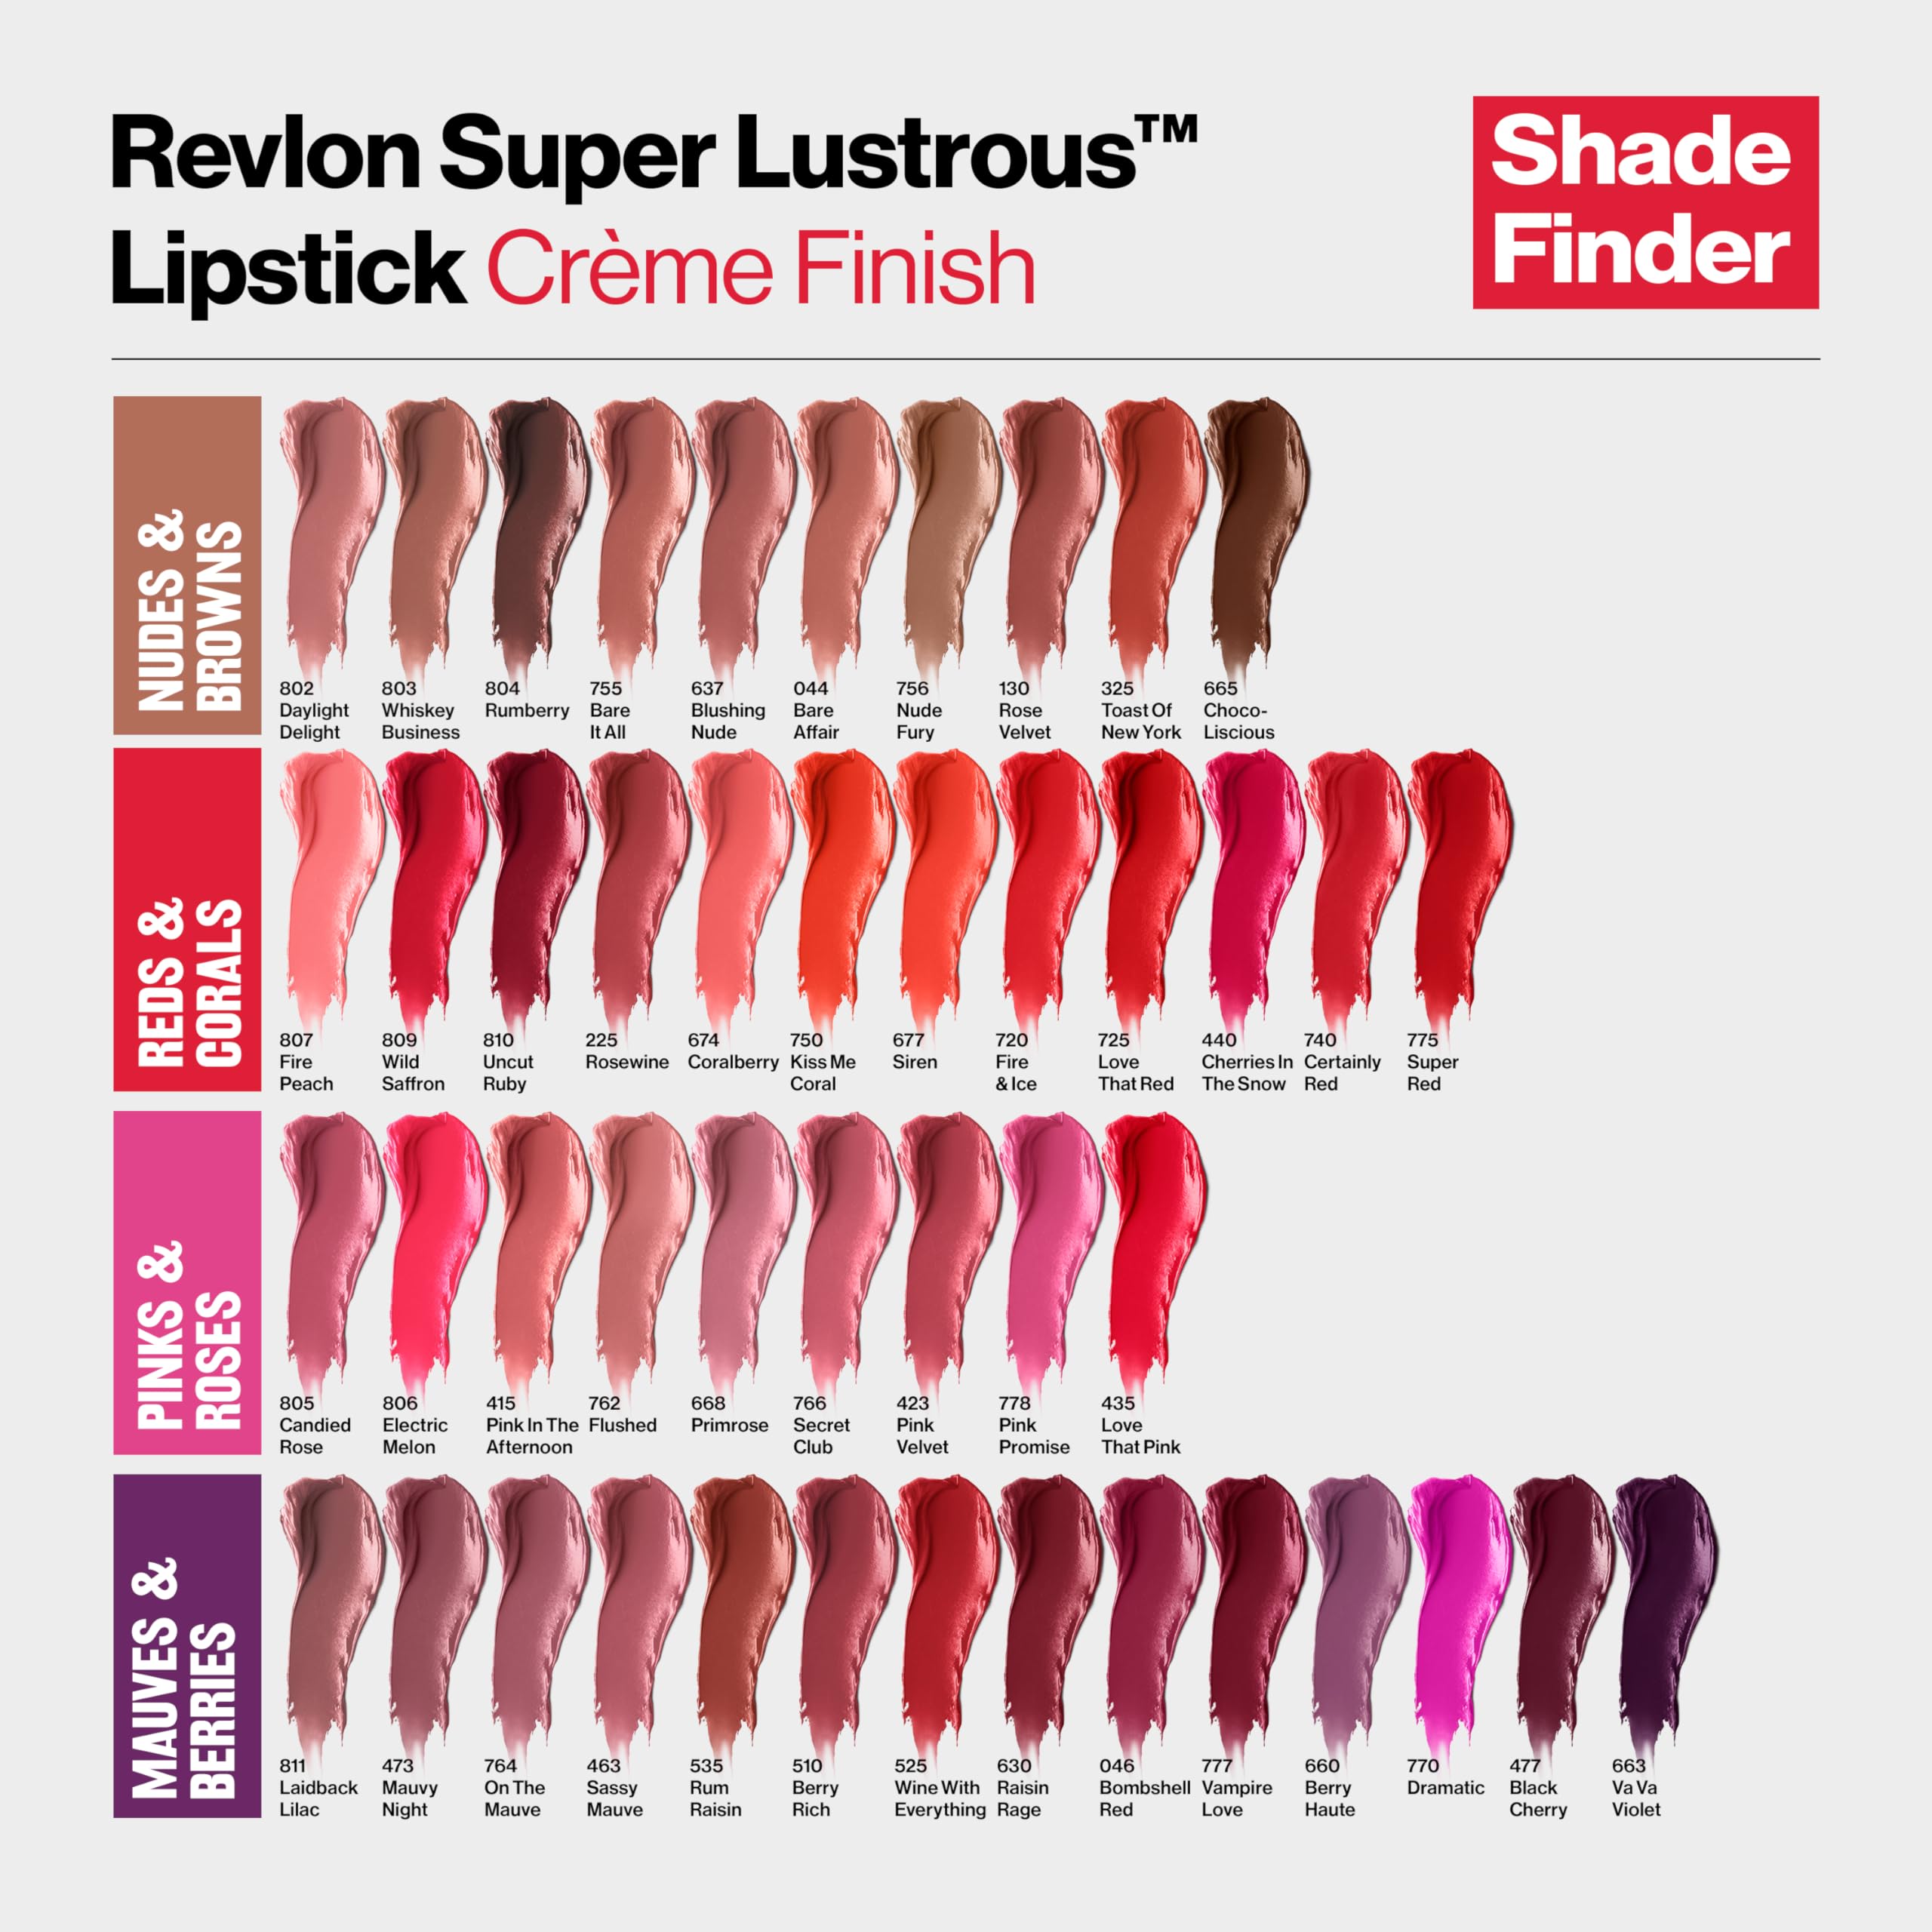 REVLON Super Lustrous Lipstick, Creamy Formula For Soft, Fuller-Looking Lips, Moisturized Feel, 807 Fire Peach, 0.15 oz